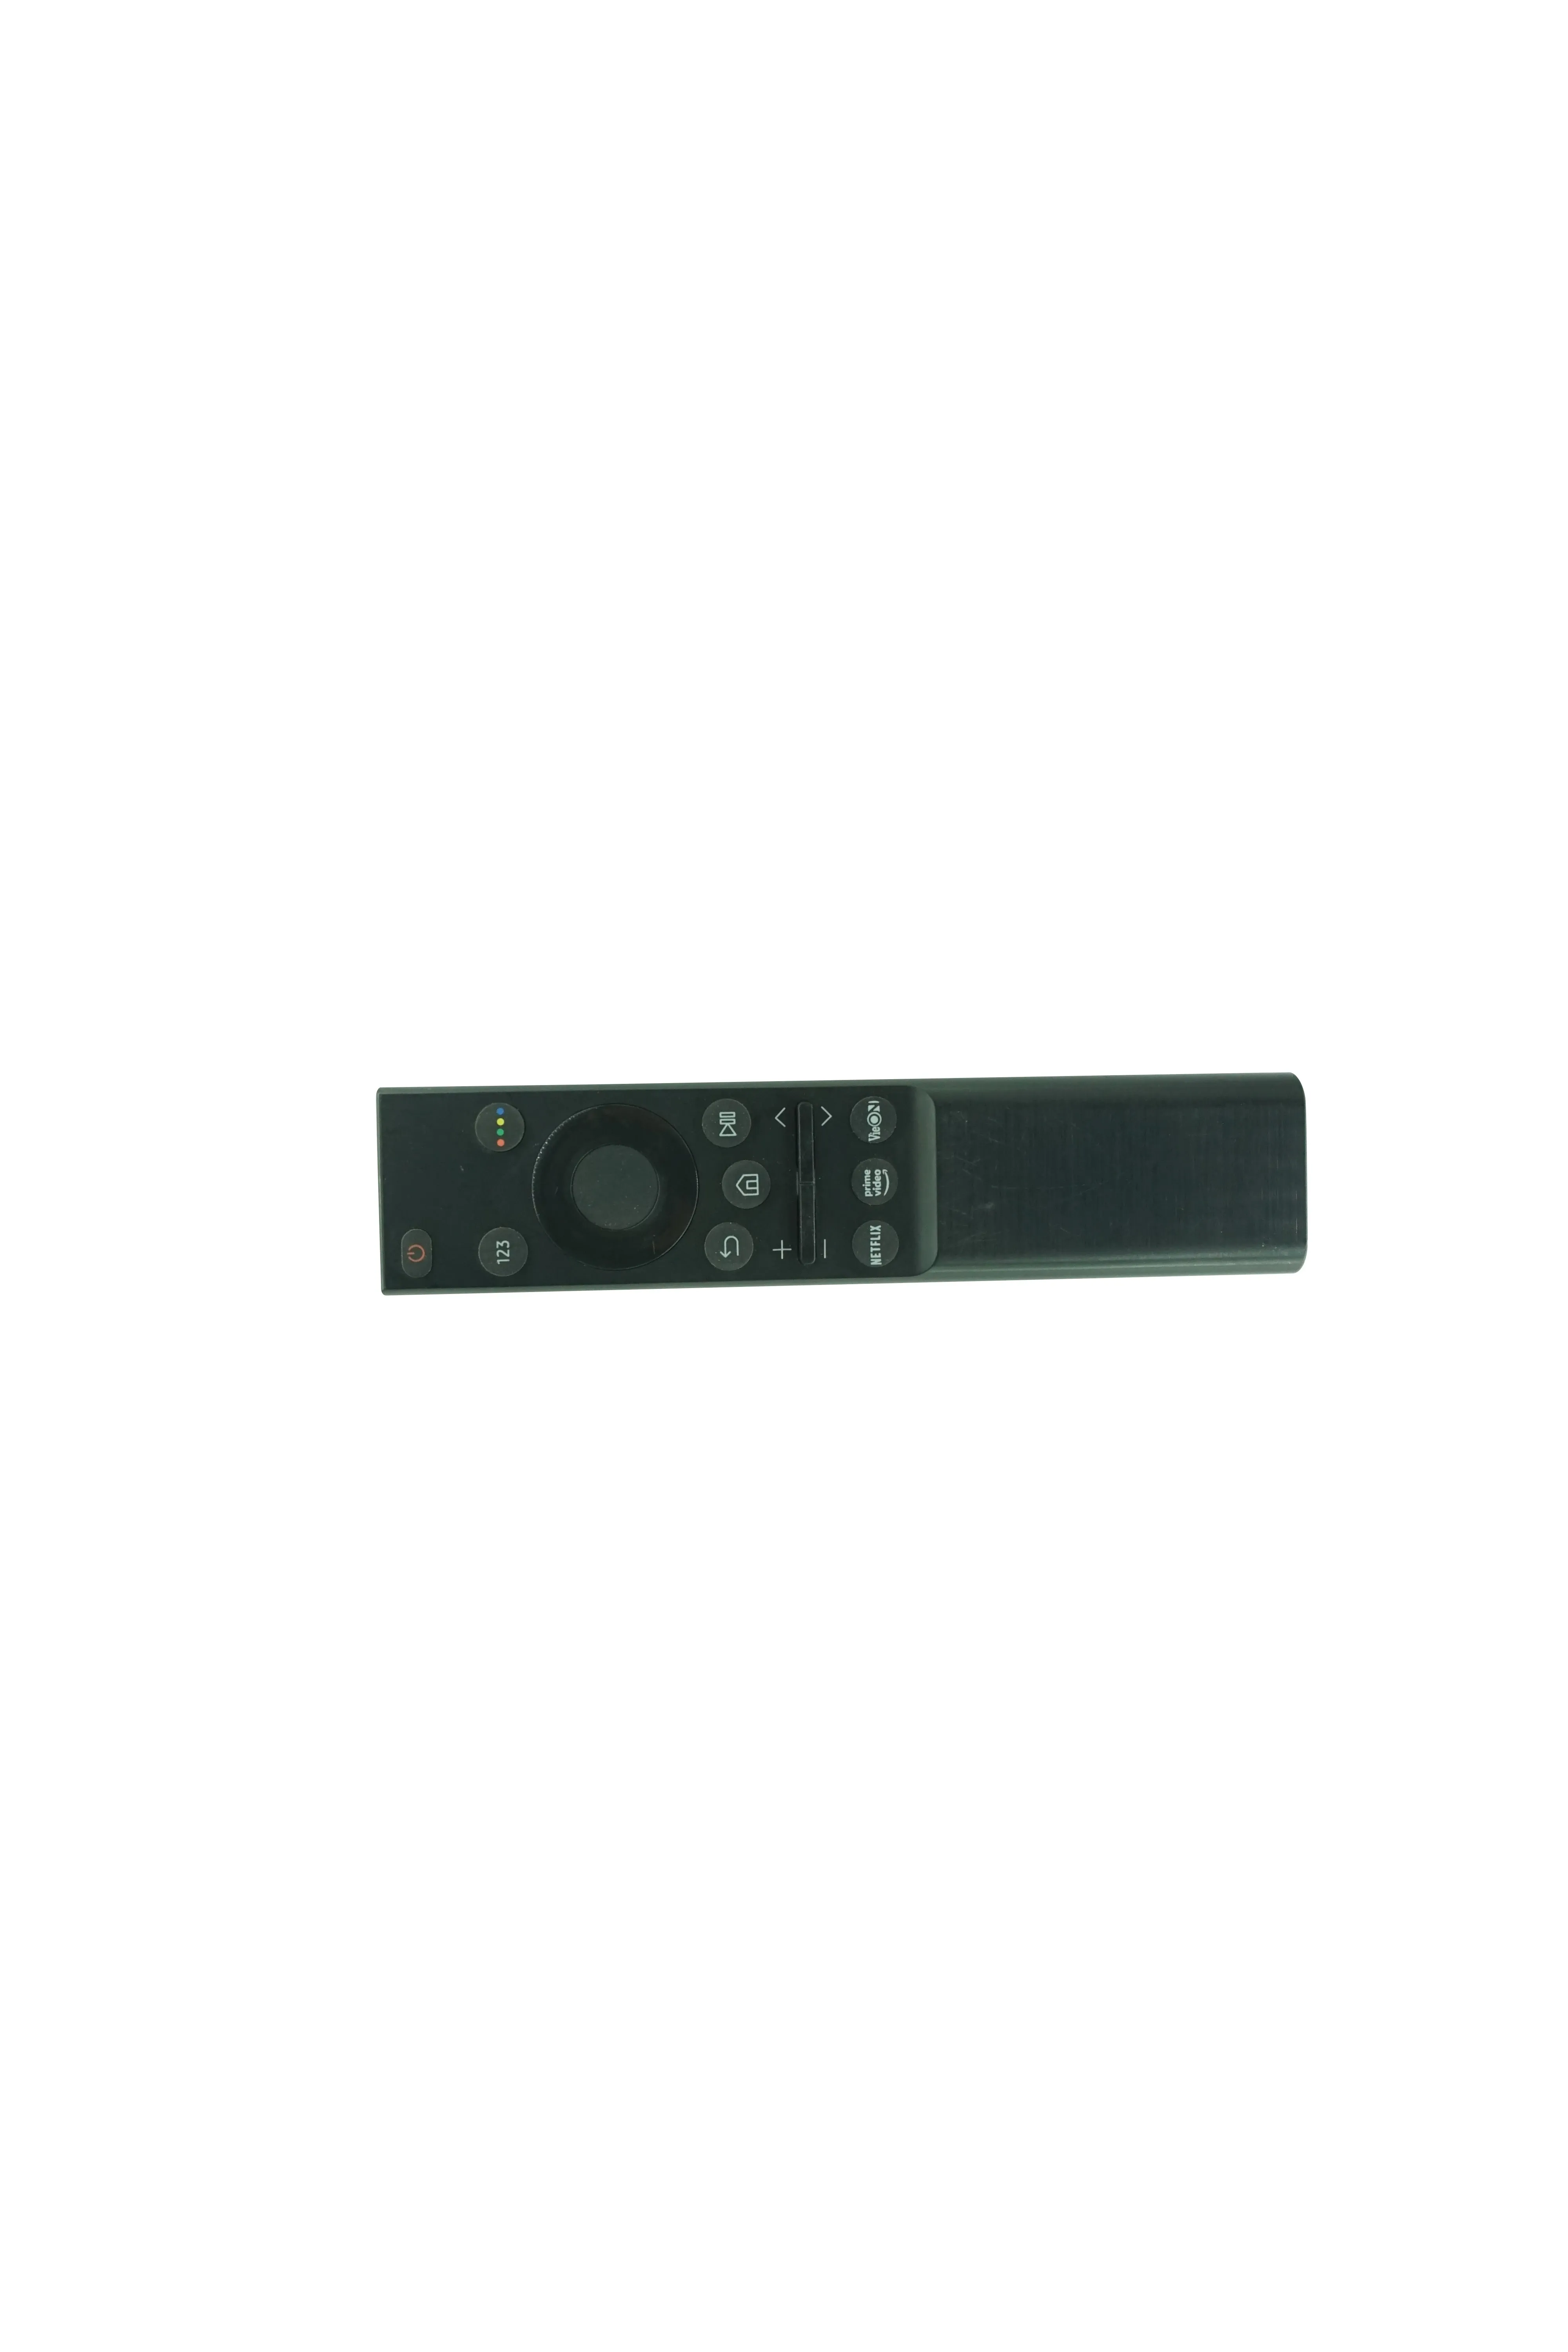 Remote Control For Samsung UE55AU7160U UE55AU7170U UE55AU7500U UE55AU7540U UE55AU7560U UE55AU7570U UE58AU7100UXUA UE58AU7160U Smart LED 4K HDR UHD HDTV TV